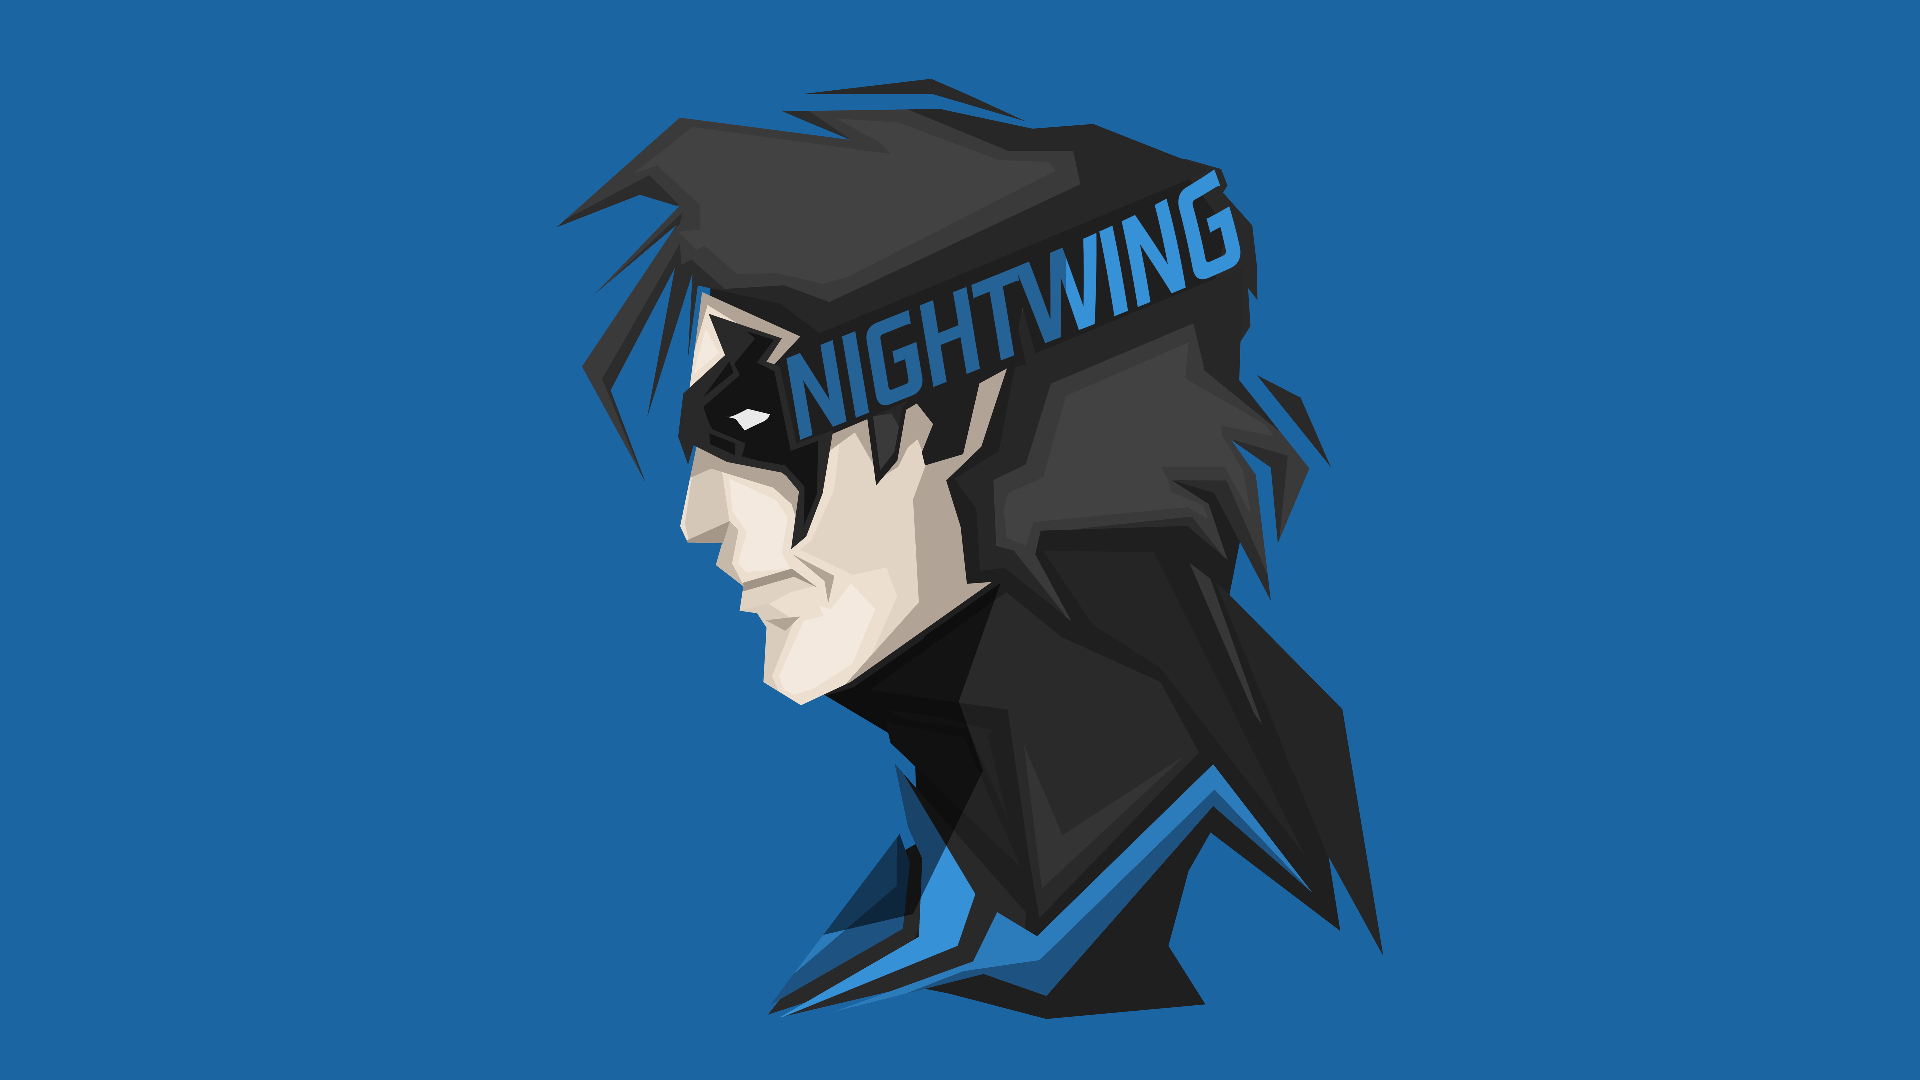 Nightwing Wallpaper hd free download